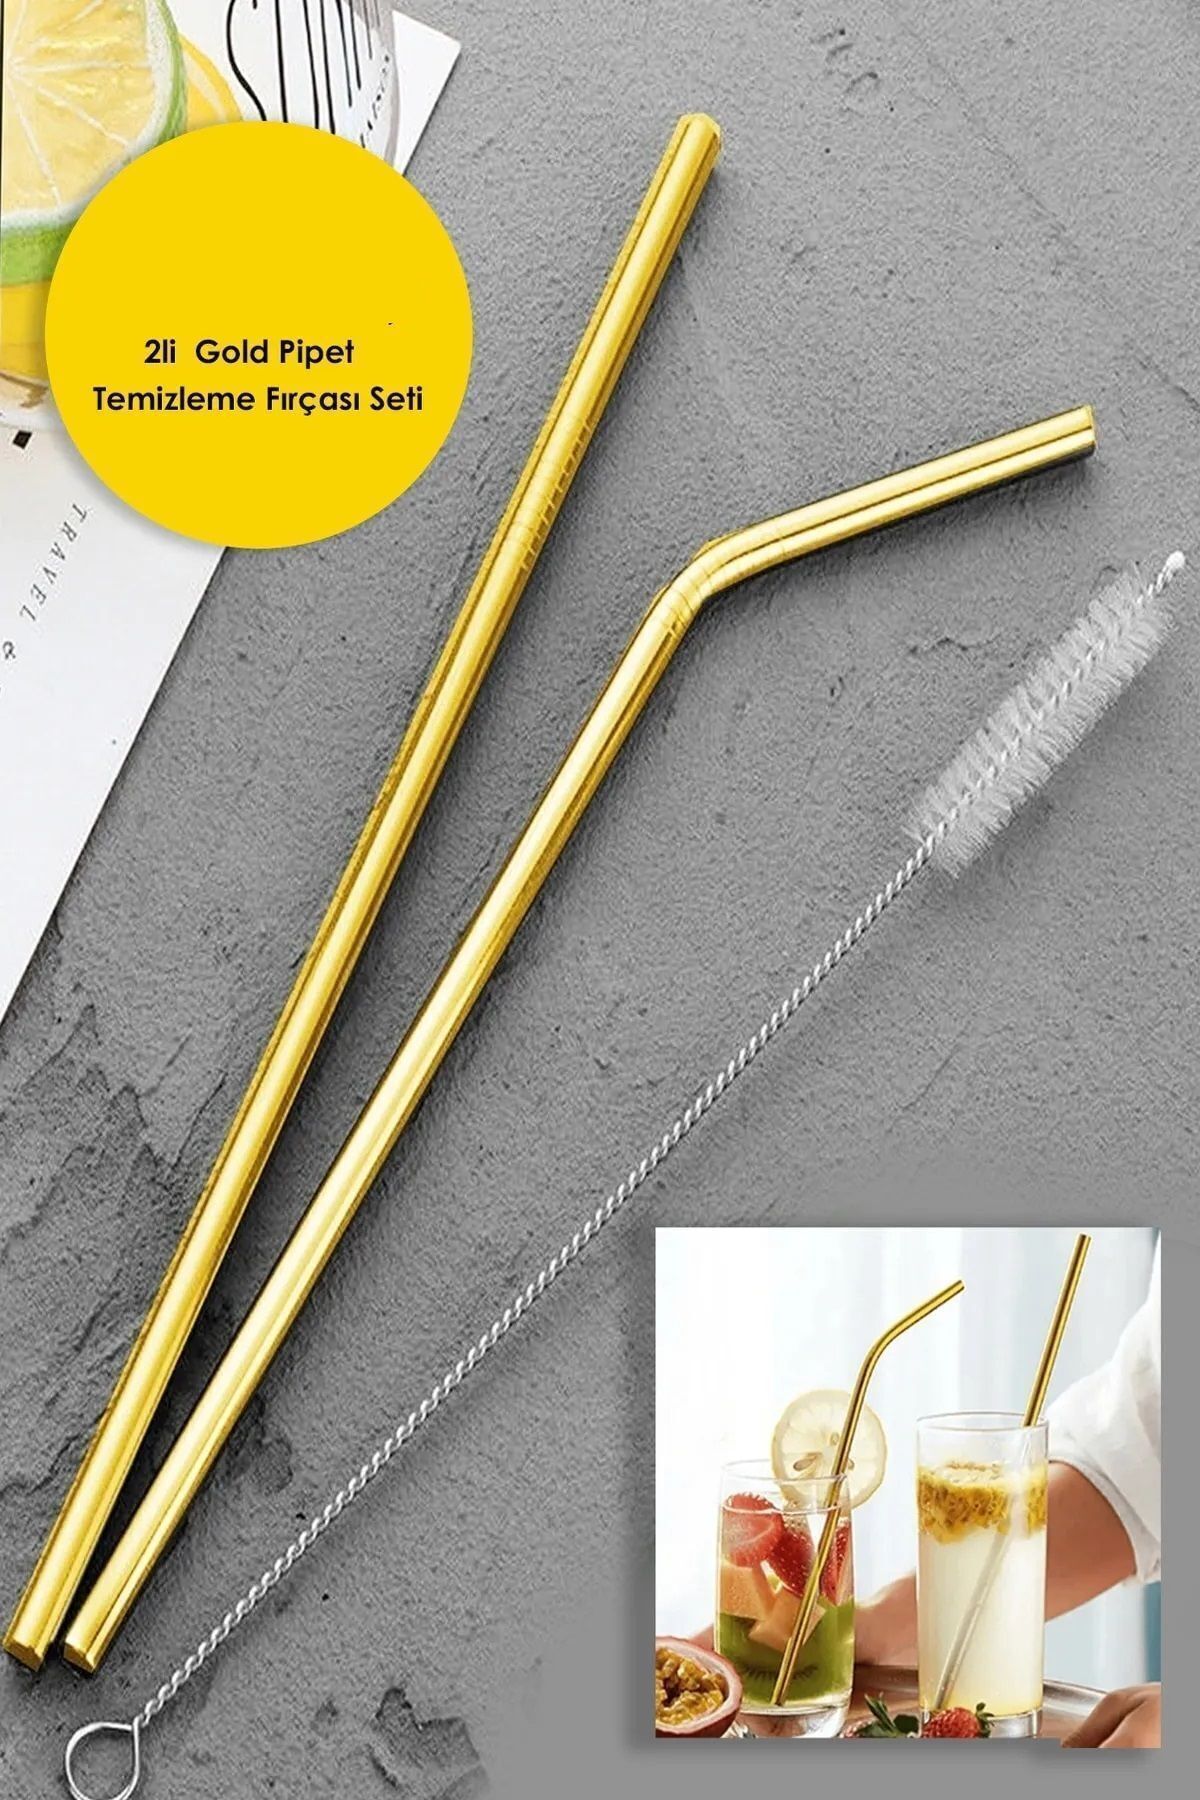 Keyfi Sepet 2li Gold Metal Pipet Paslanmaz Çelik Meşrubat Pipeti Çubuk Pipet Temizleme Fırçası